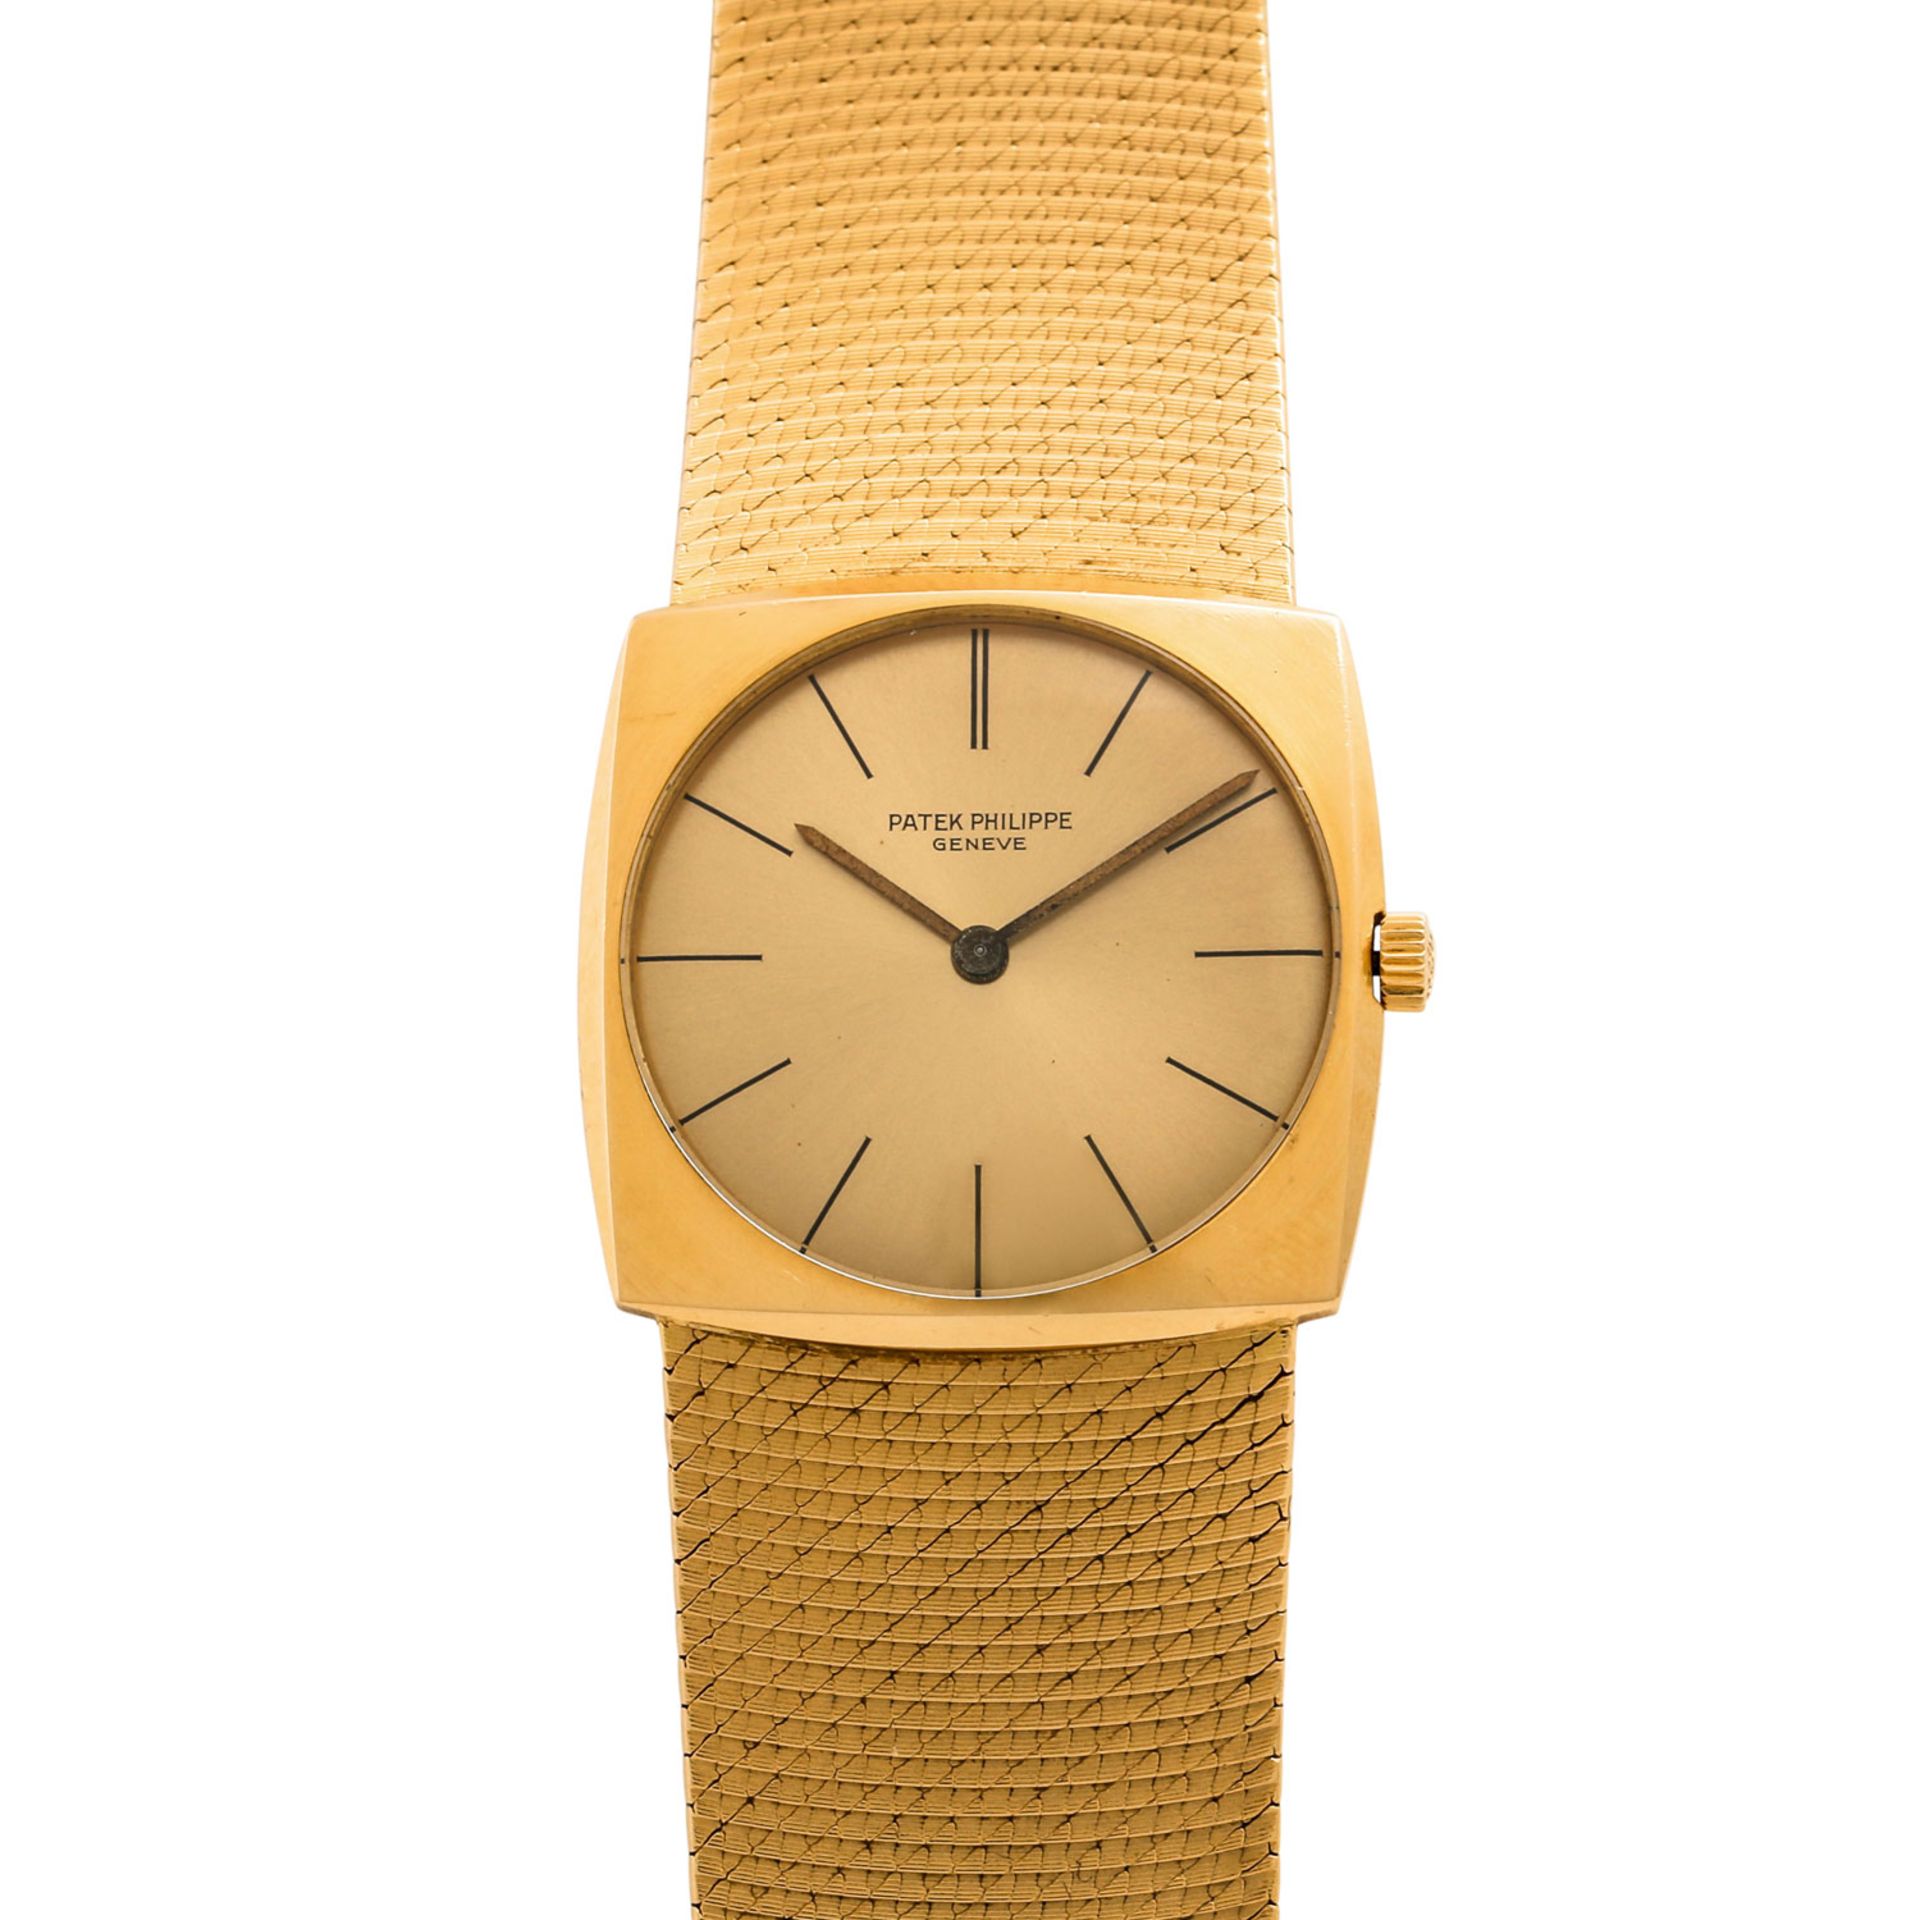 PATEK PHILIPPE Vintage Armbanduhr, Ref. 3523/1.Gold 18K. Handaufzug-Werk, Kaliber 175.